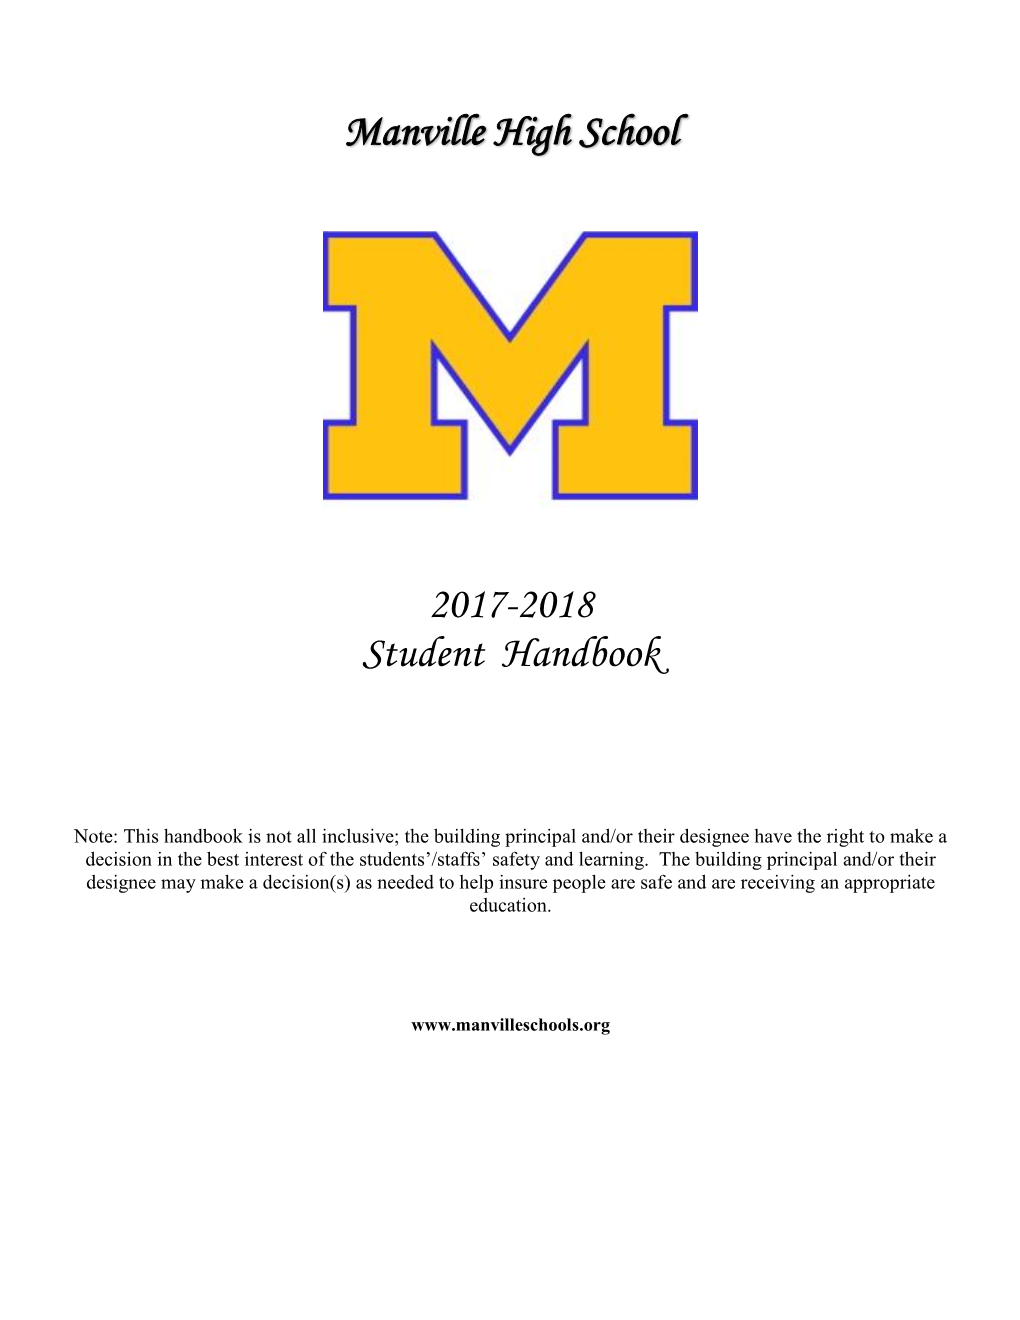 Manville High School 2017-2018 Student Handbook